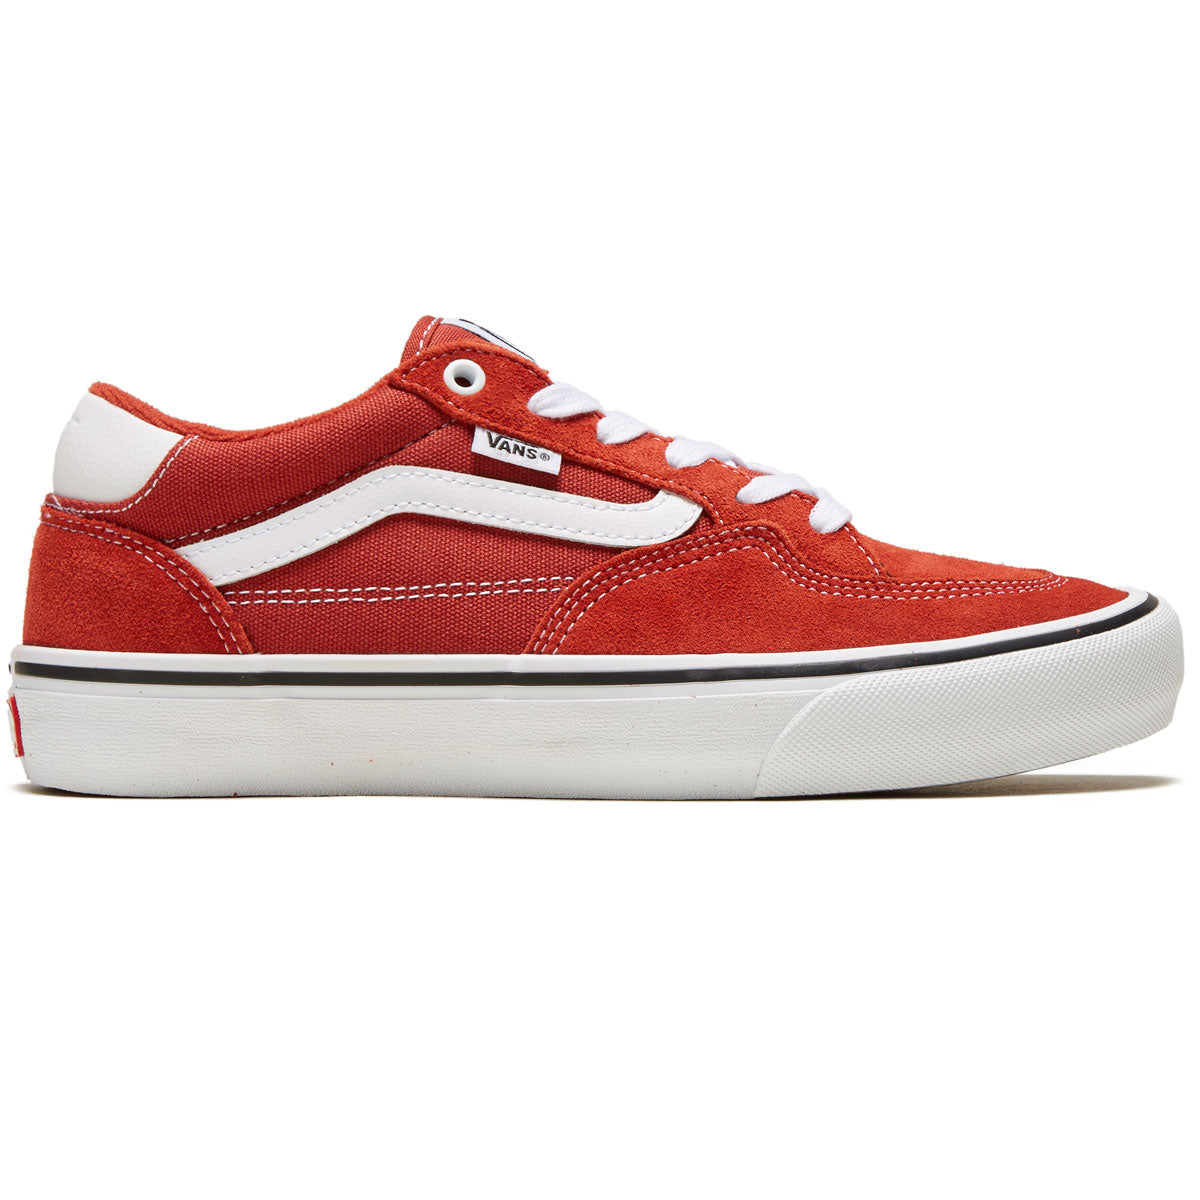 Vans Rowan Shoes - Red/White image 1